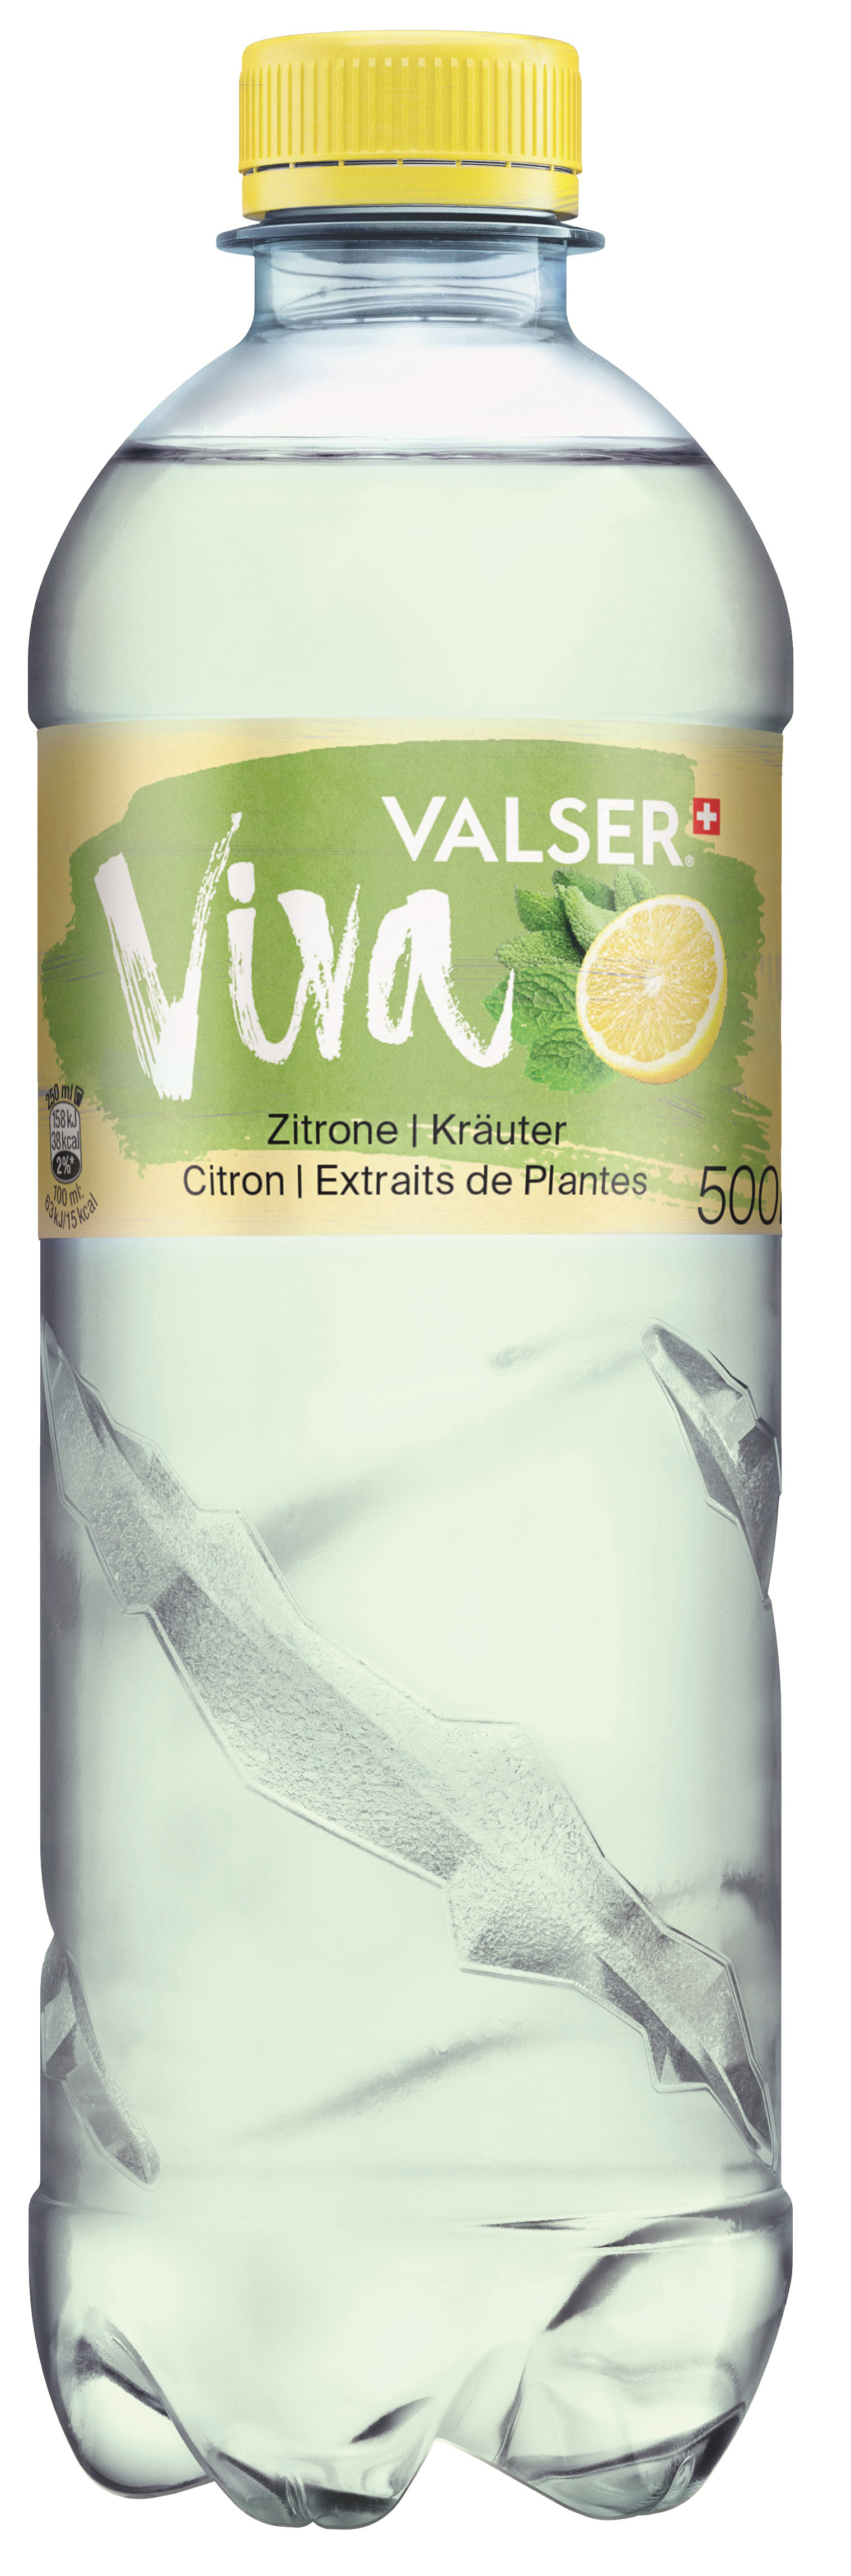 VALSER Viva Citrus&Herbs PET 50cl 682891 24 pcs.